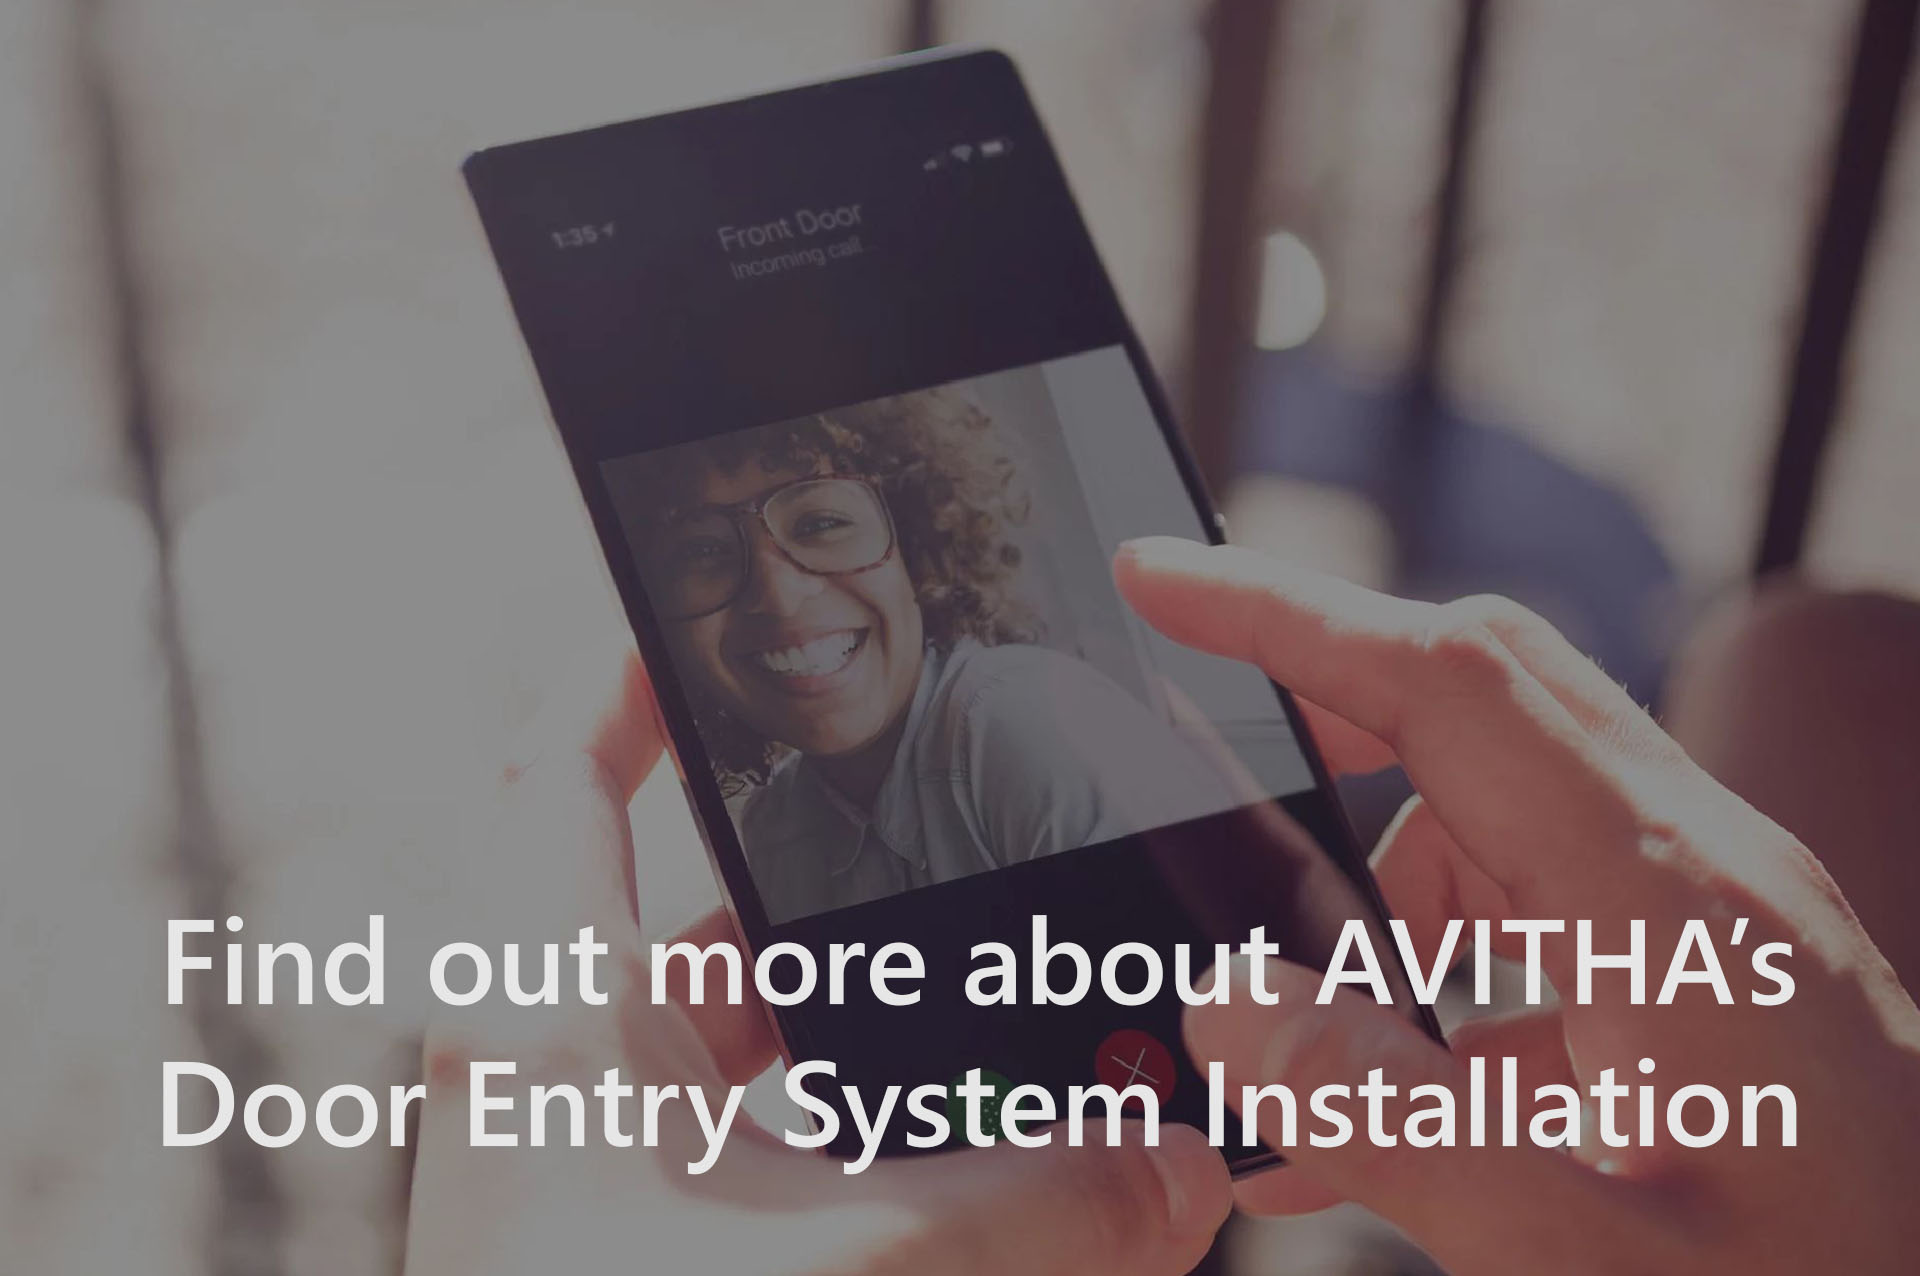 door entry system installation by AVITHA